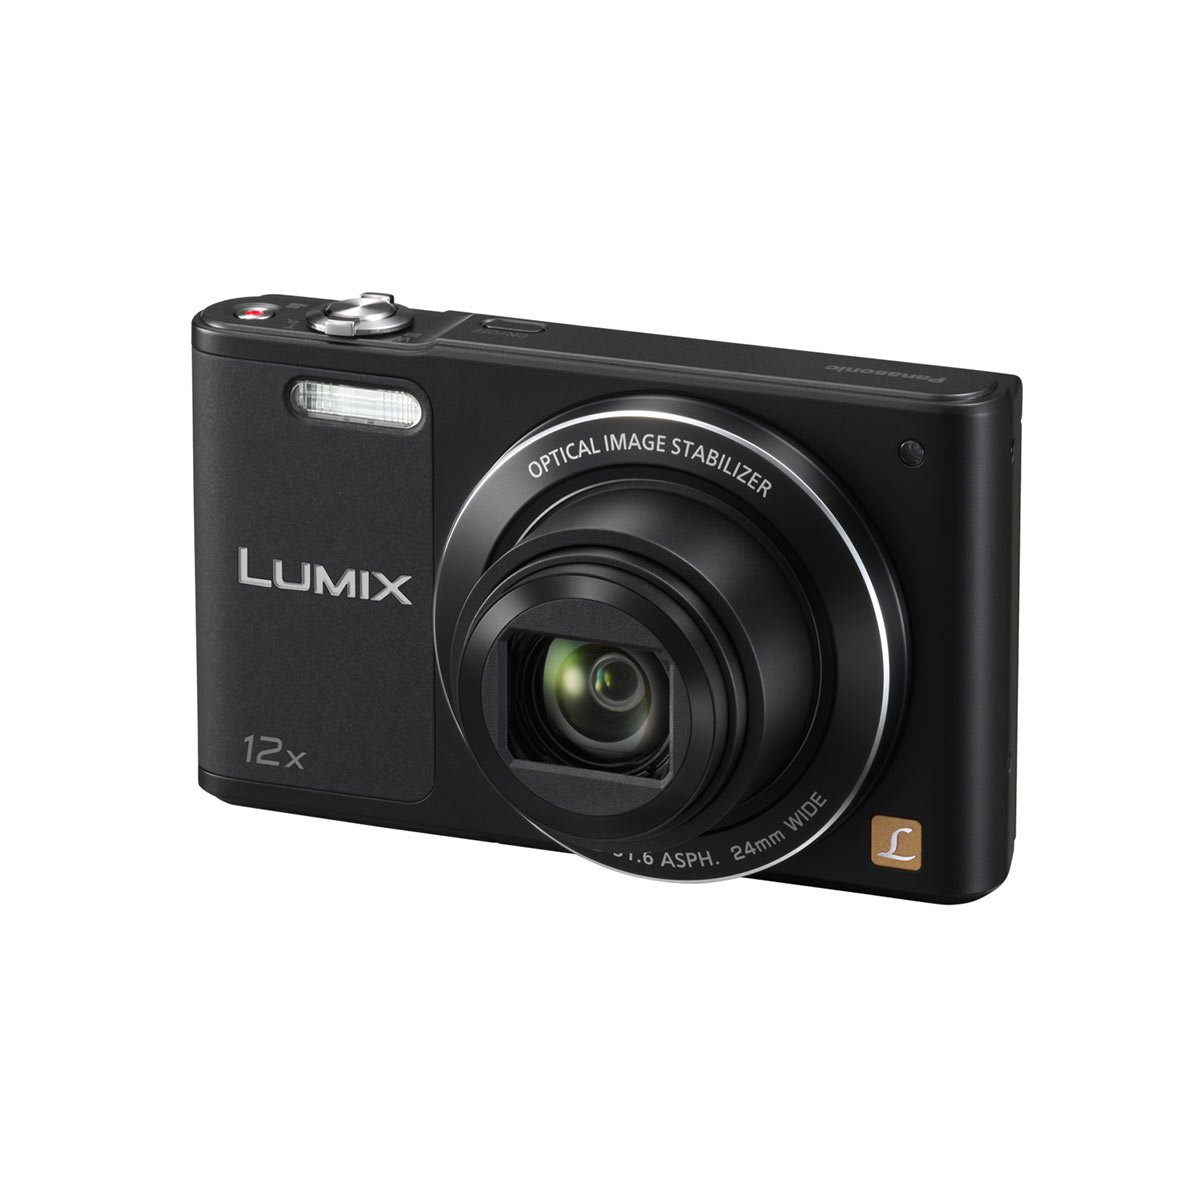 LUMIX DMC-SZ10 Fotocamera compatta resistente mirrorless